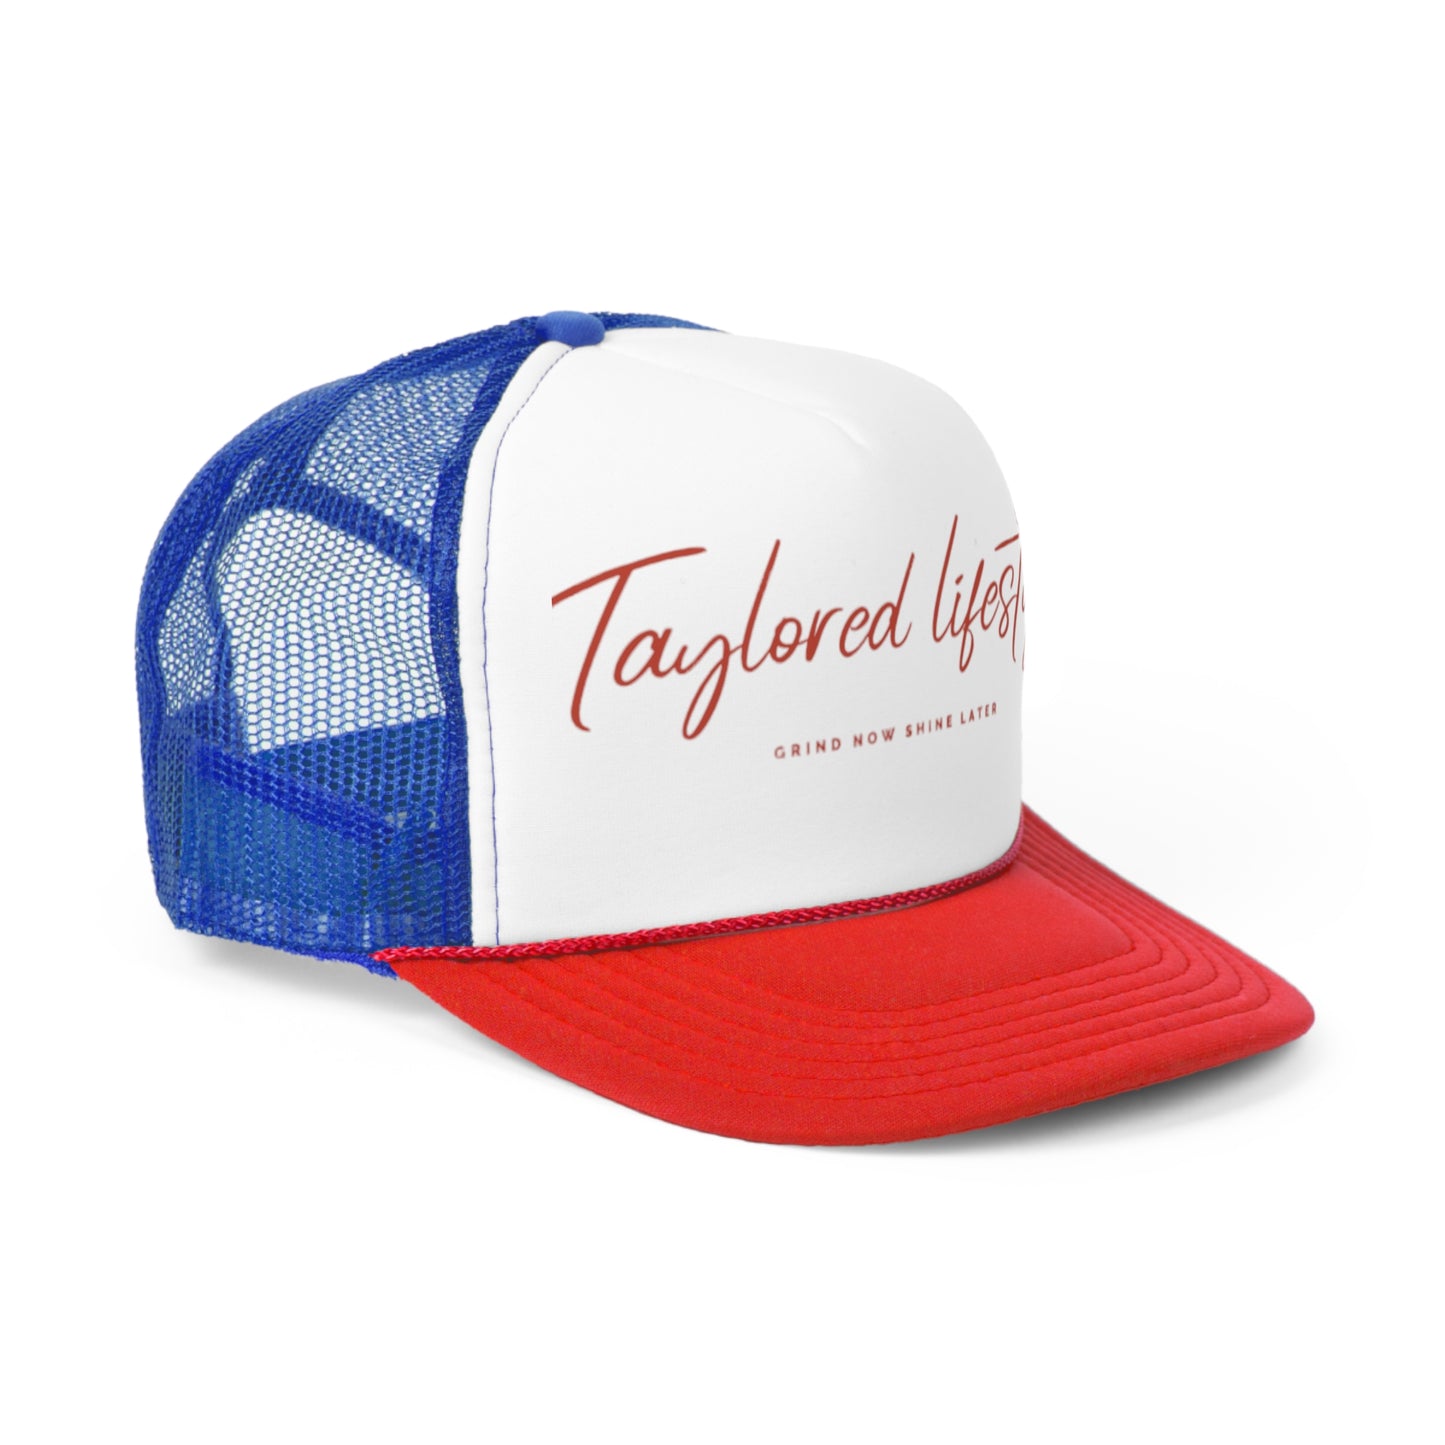 New Logo Taylored Lifestyle Trucker Hat